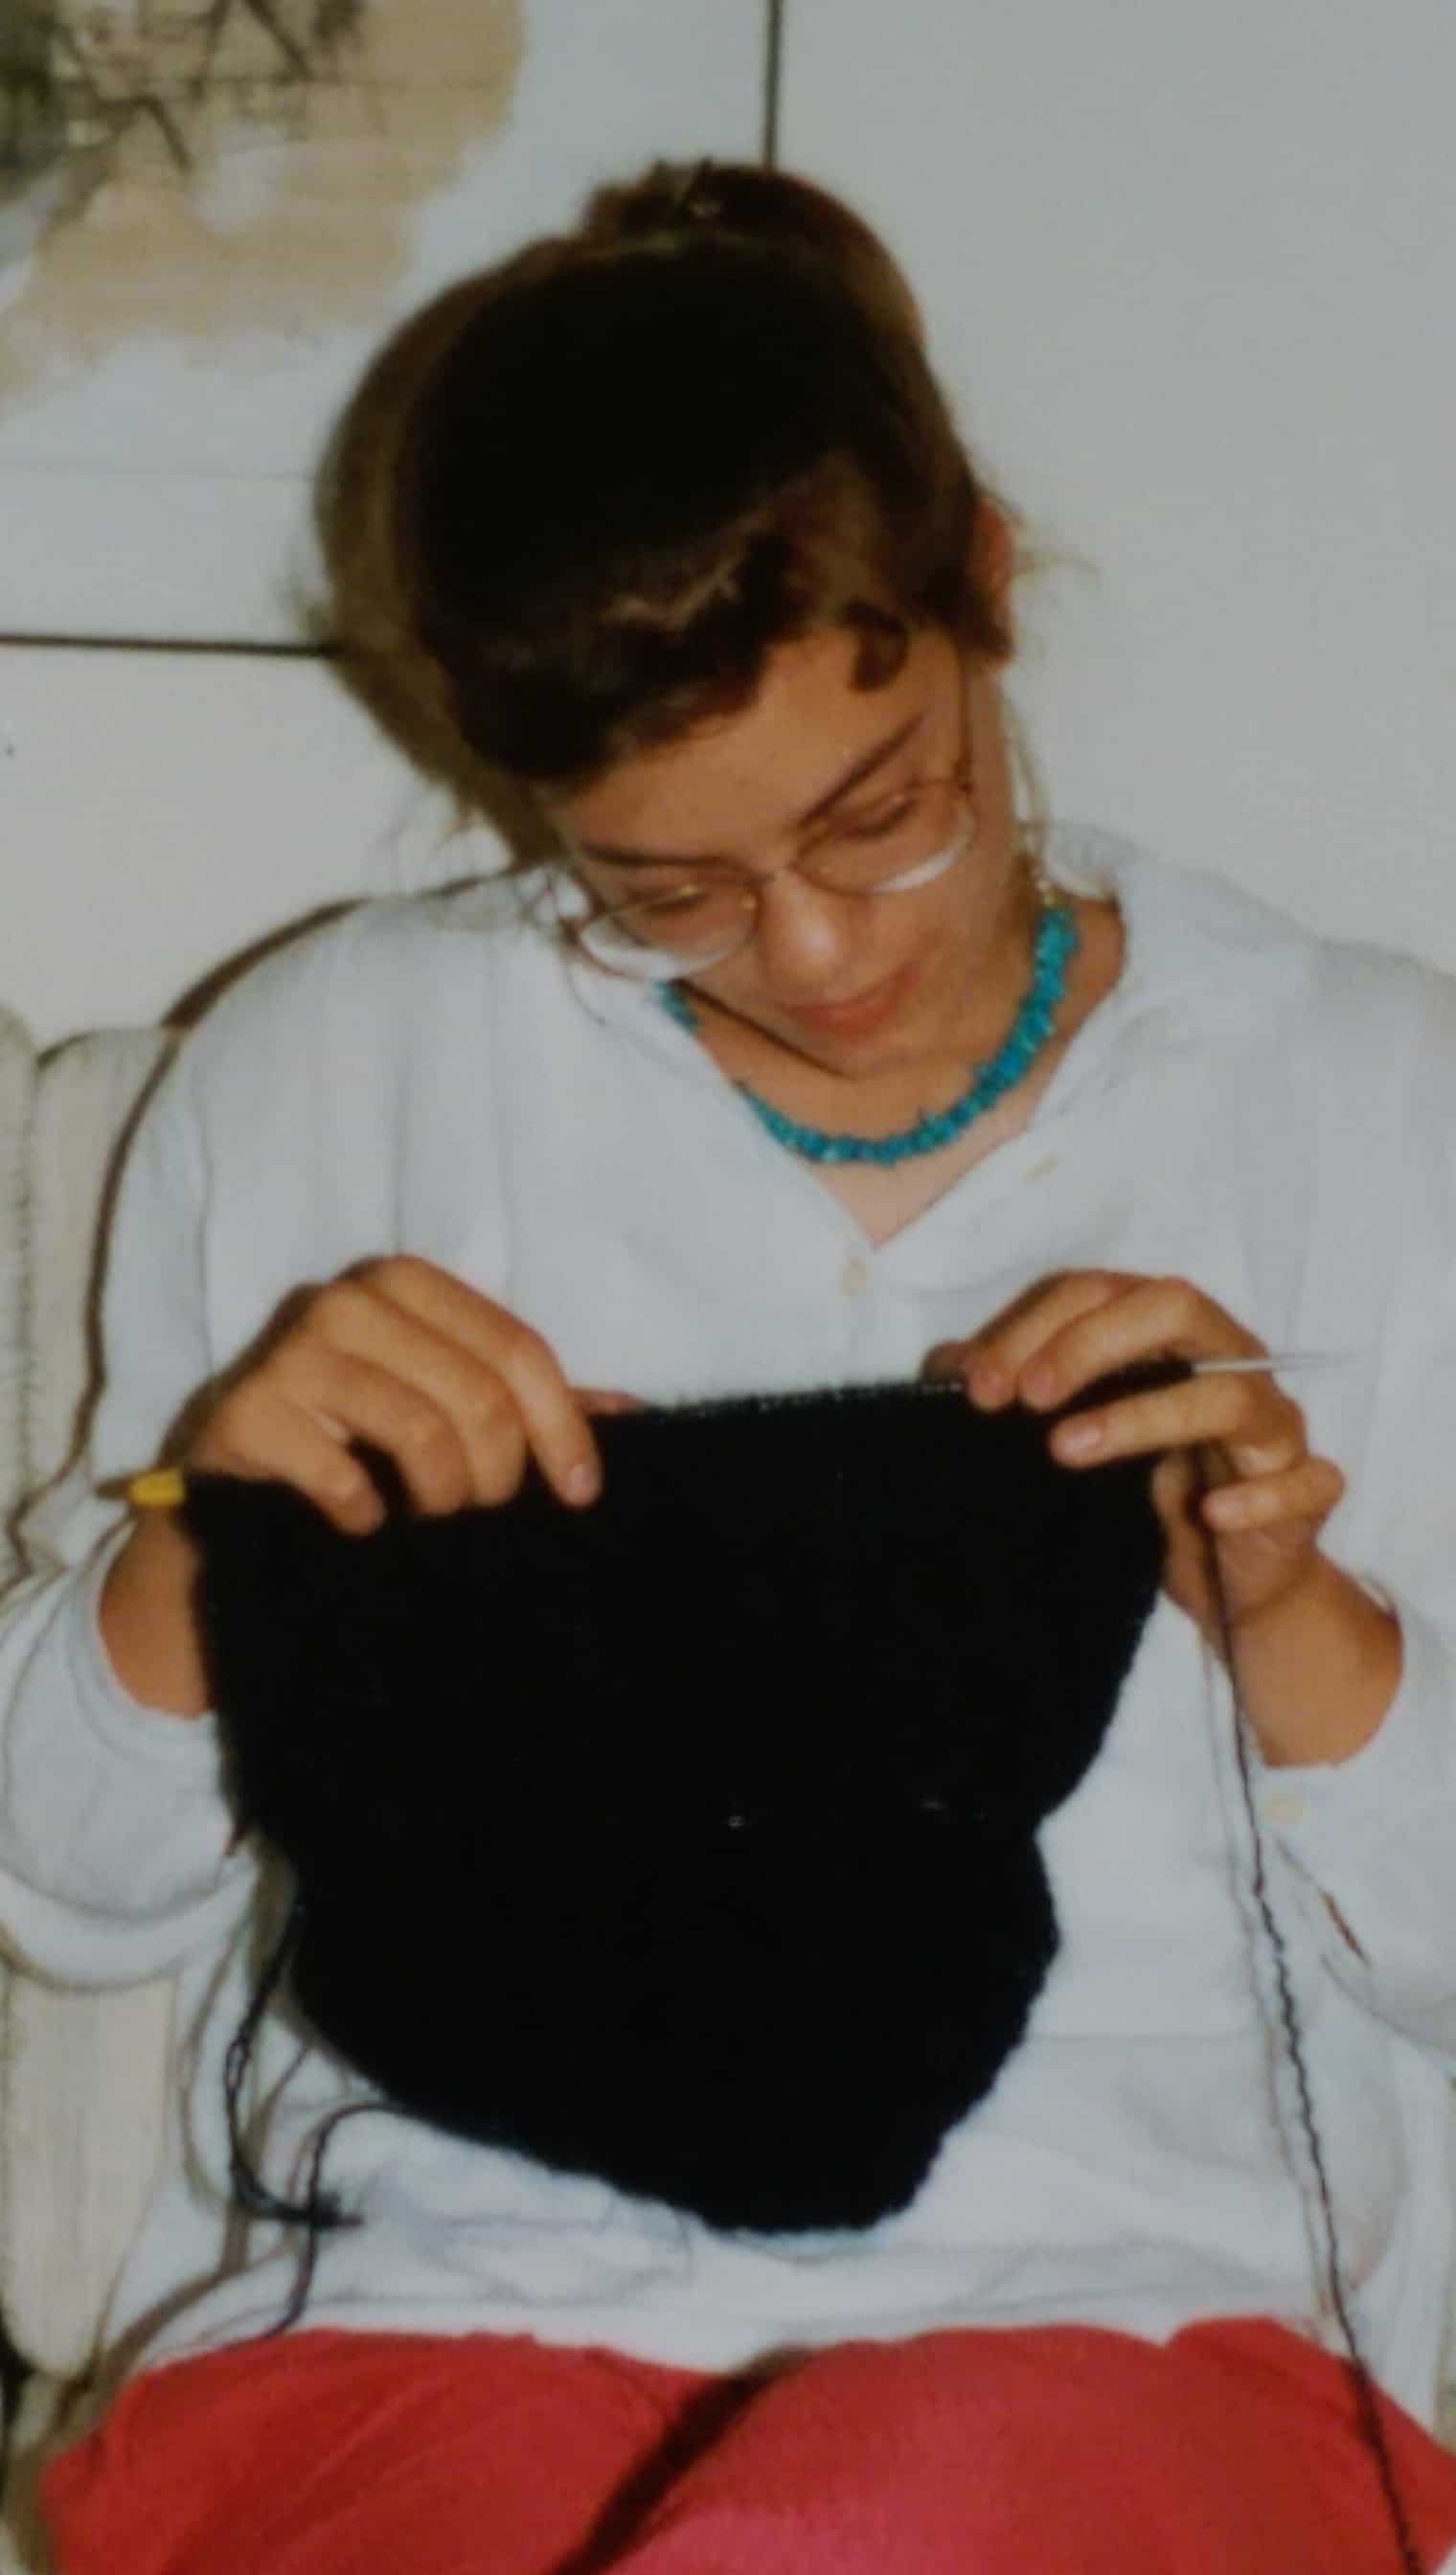 Knitting teens